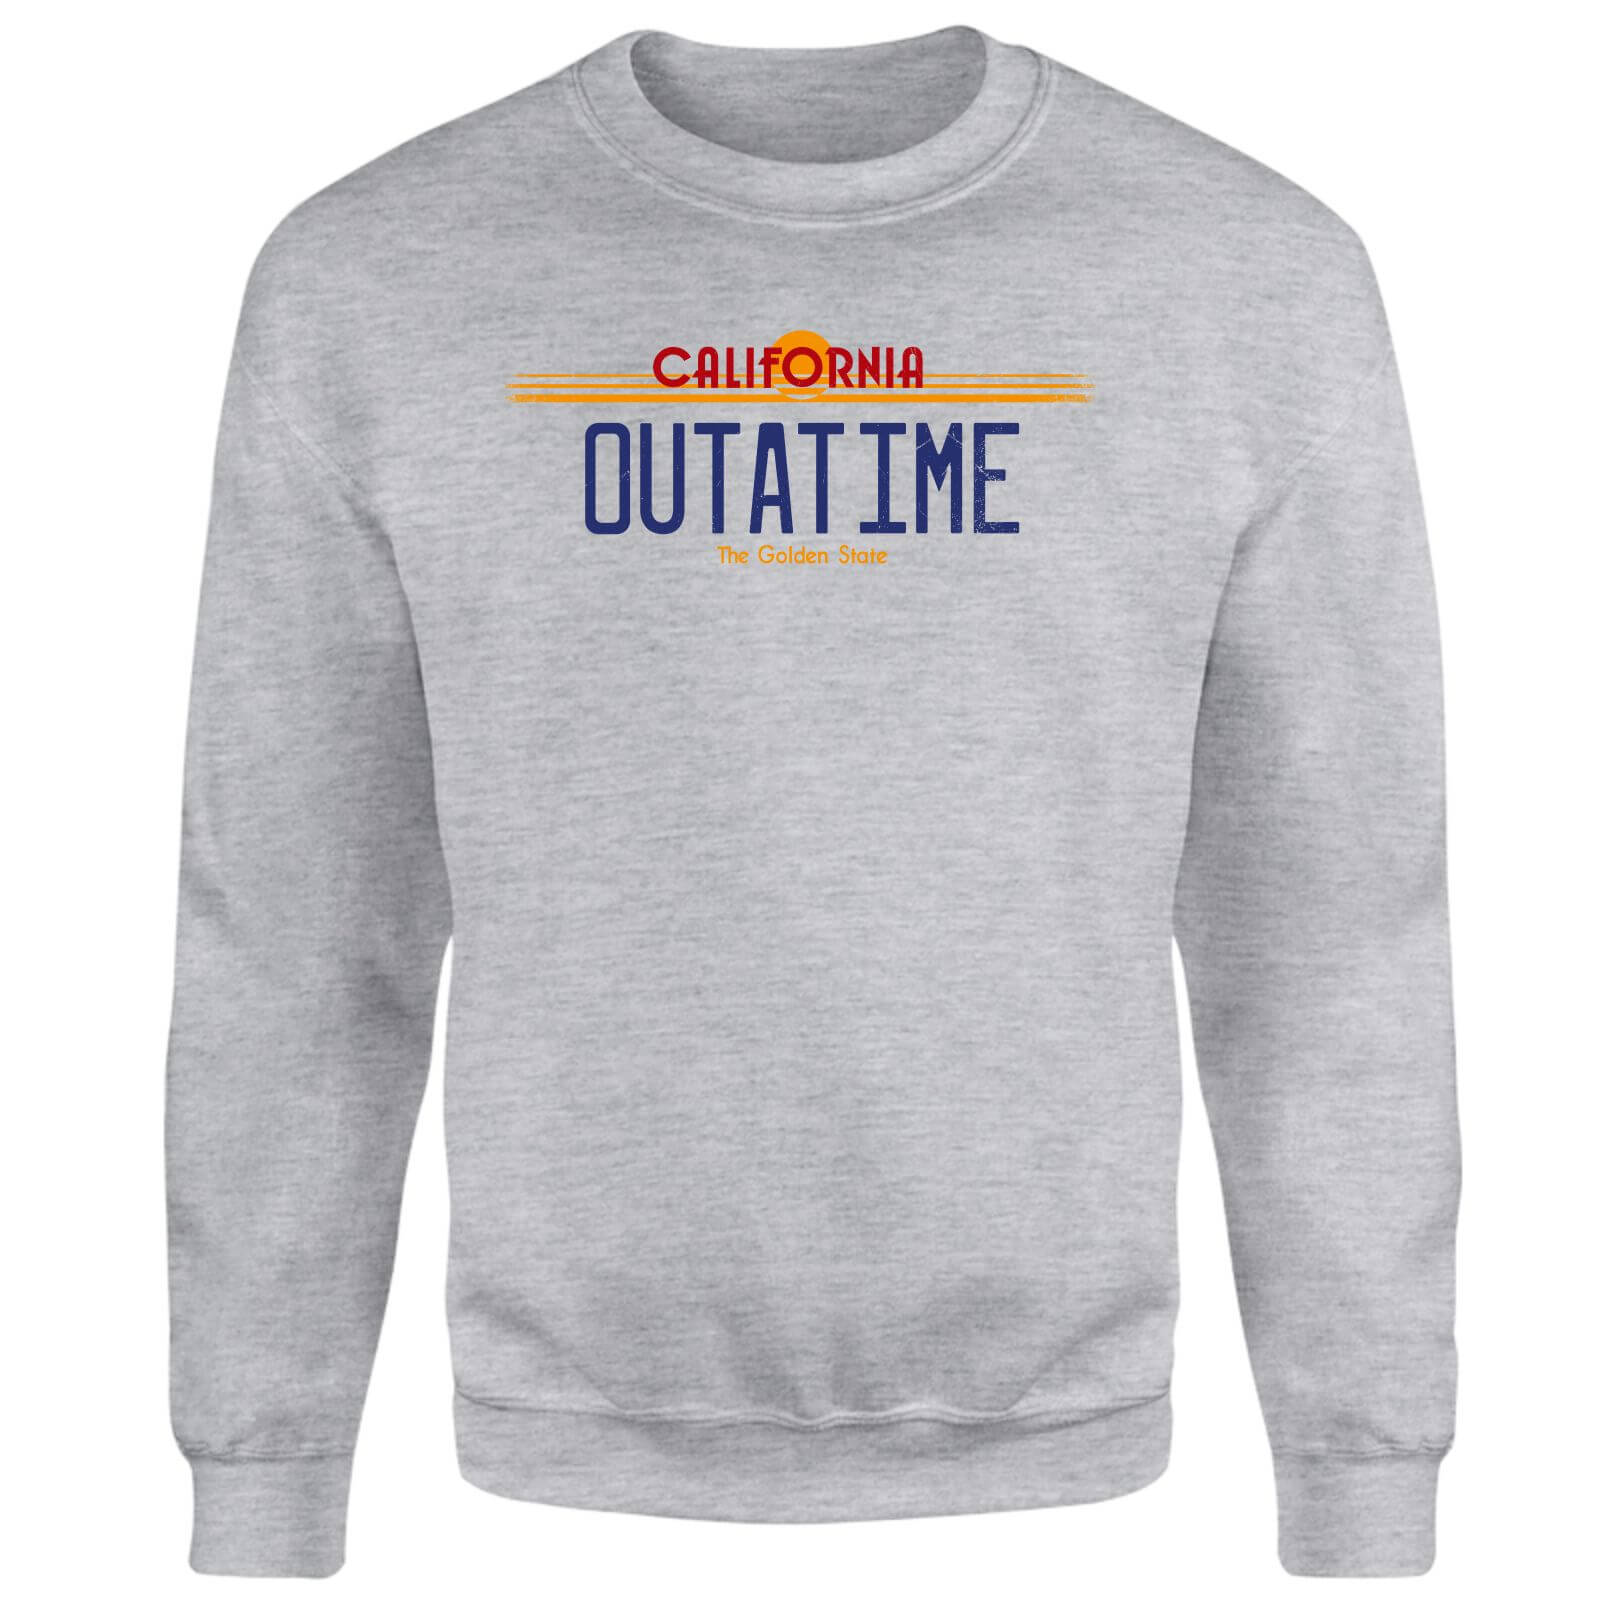 Universal Back To The Future Outatime Plate  Sweatshirt - Grey - XS - Grey